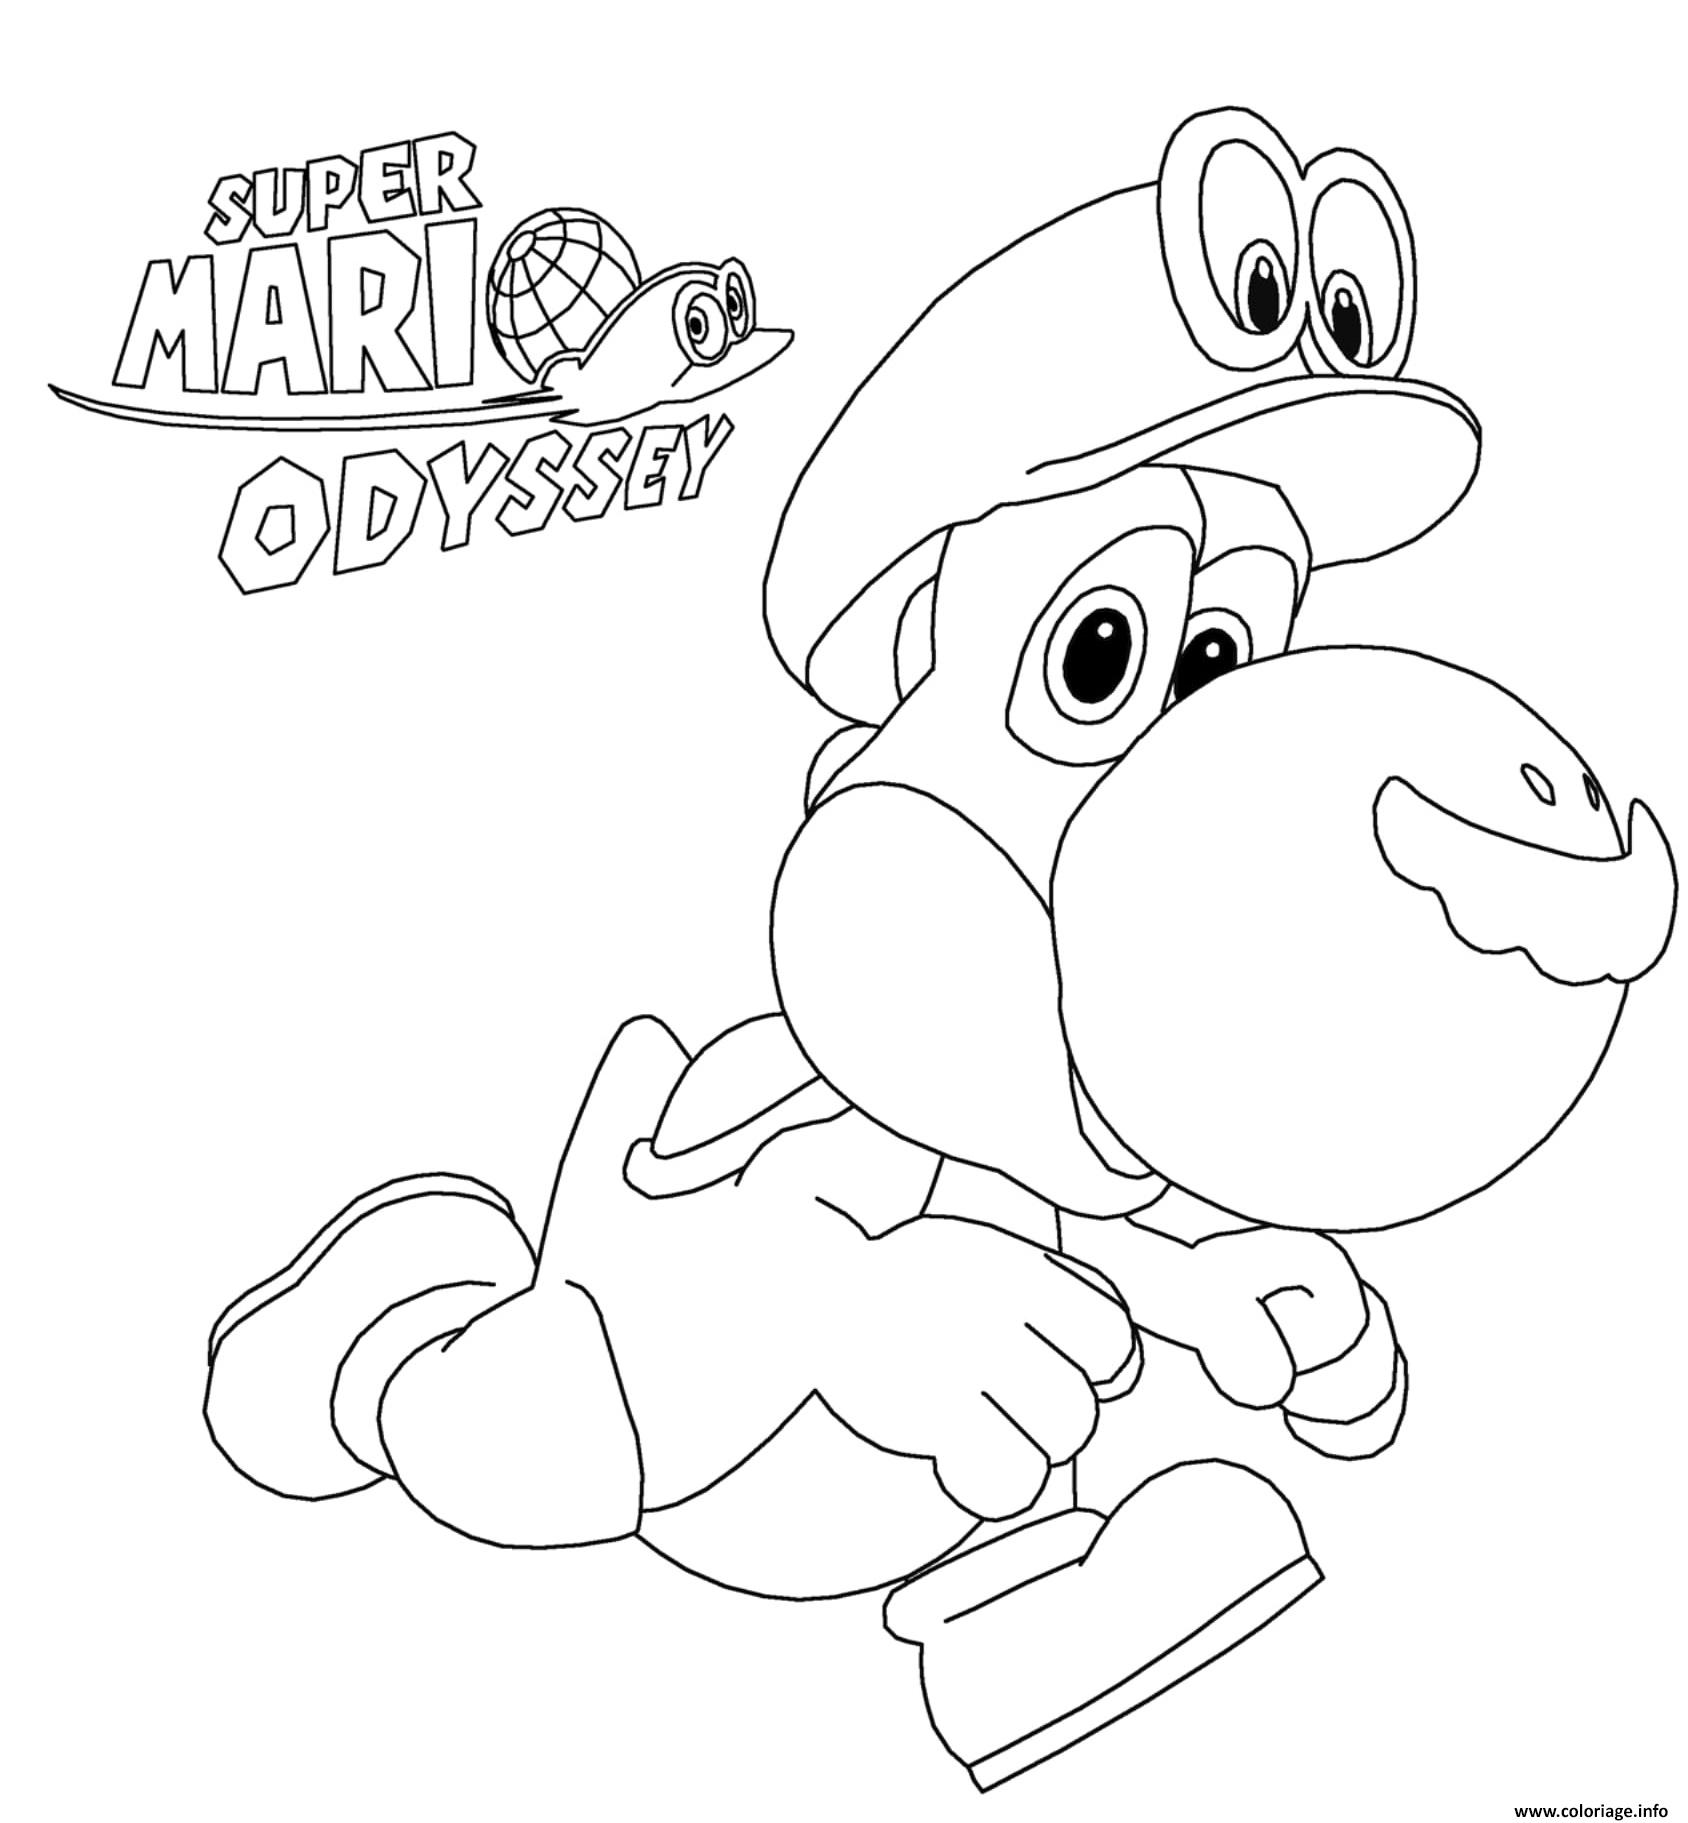 Coloriage Super Mario Odyssey Yoshi Nintendo JeColorie Com